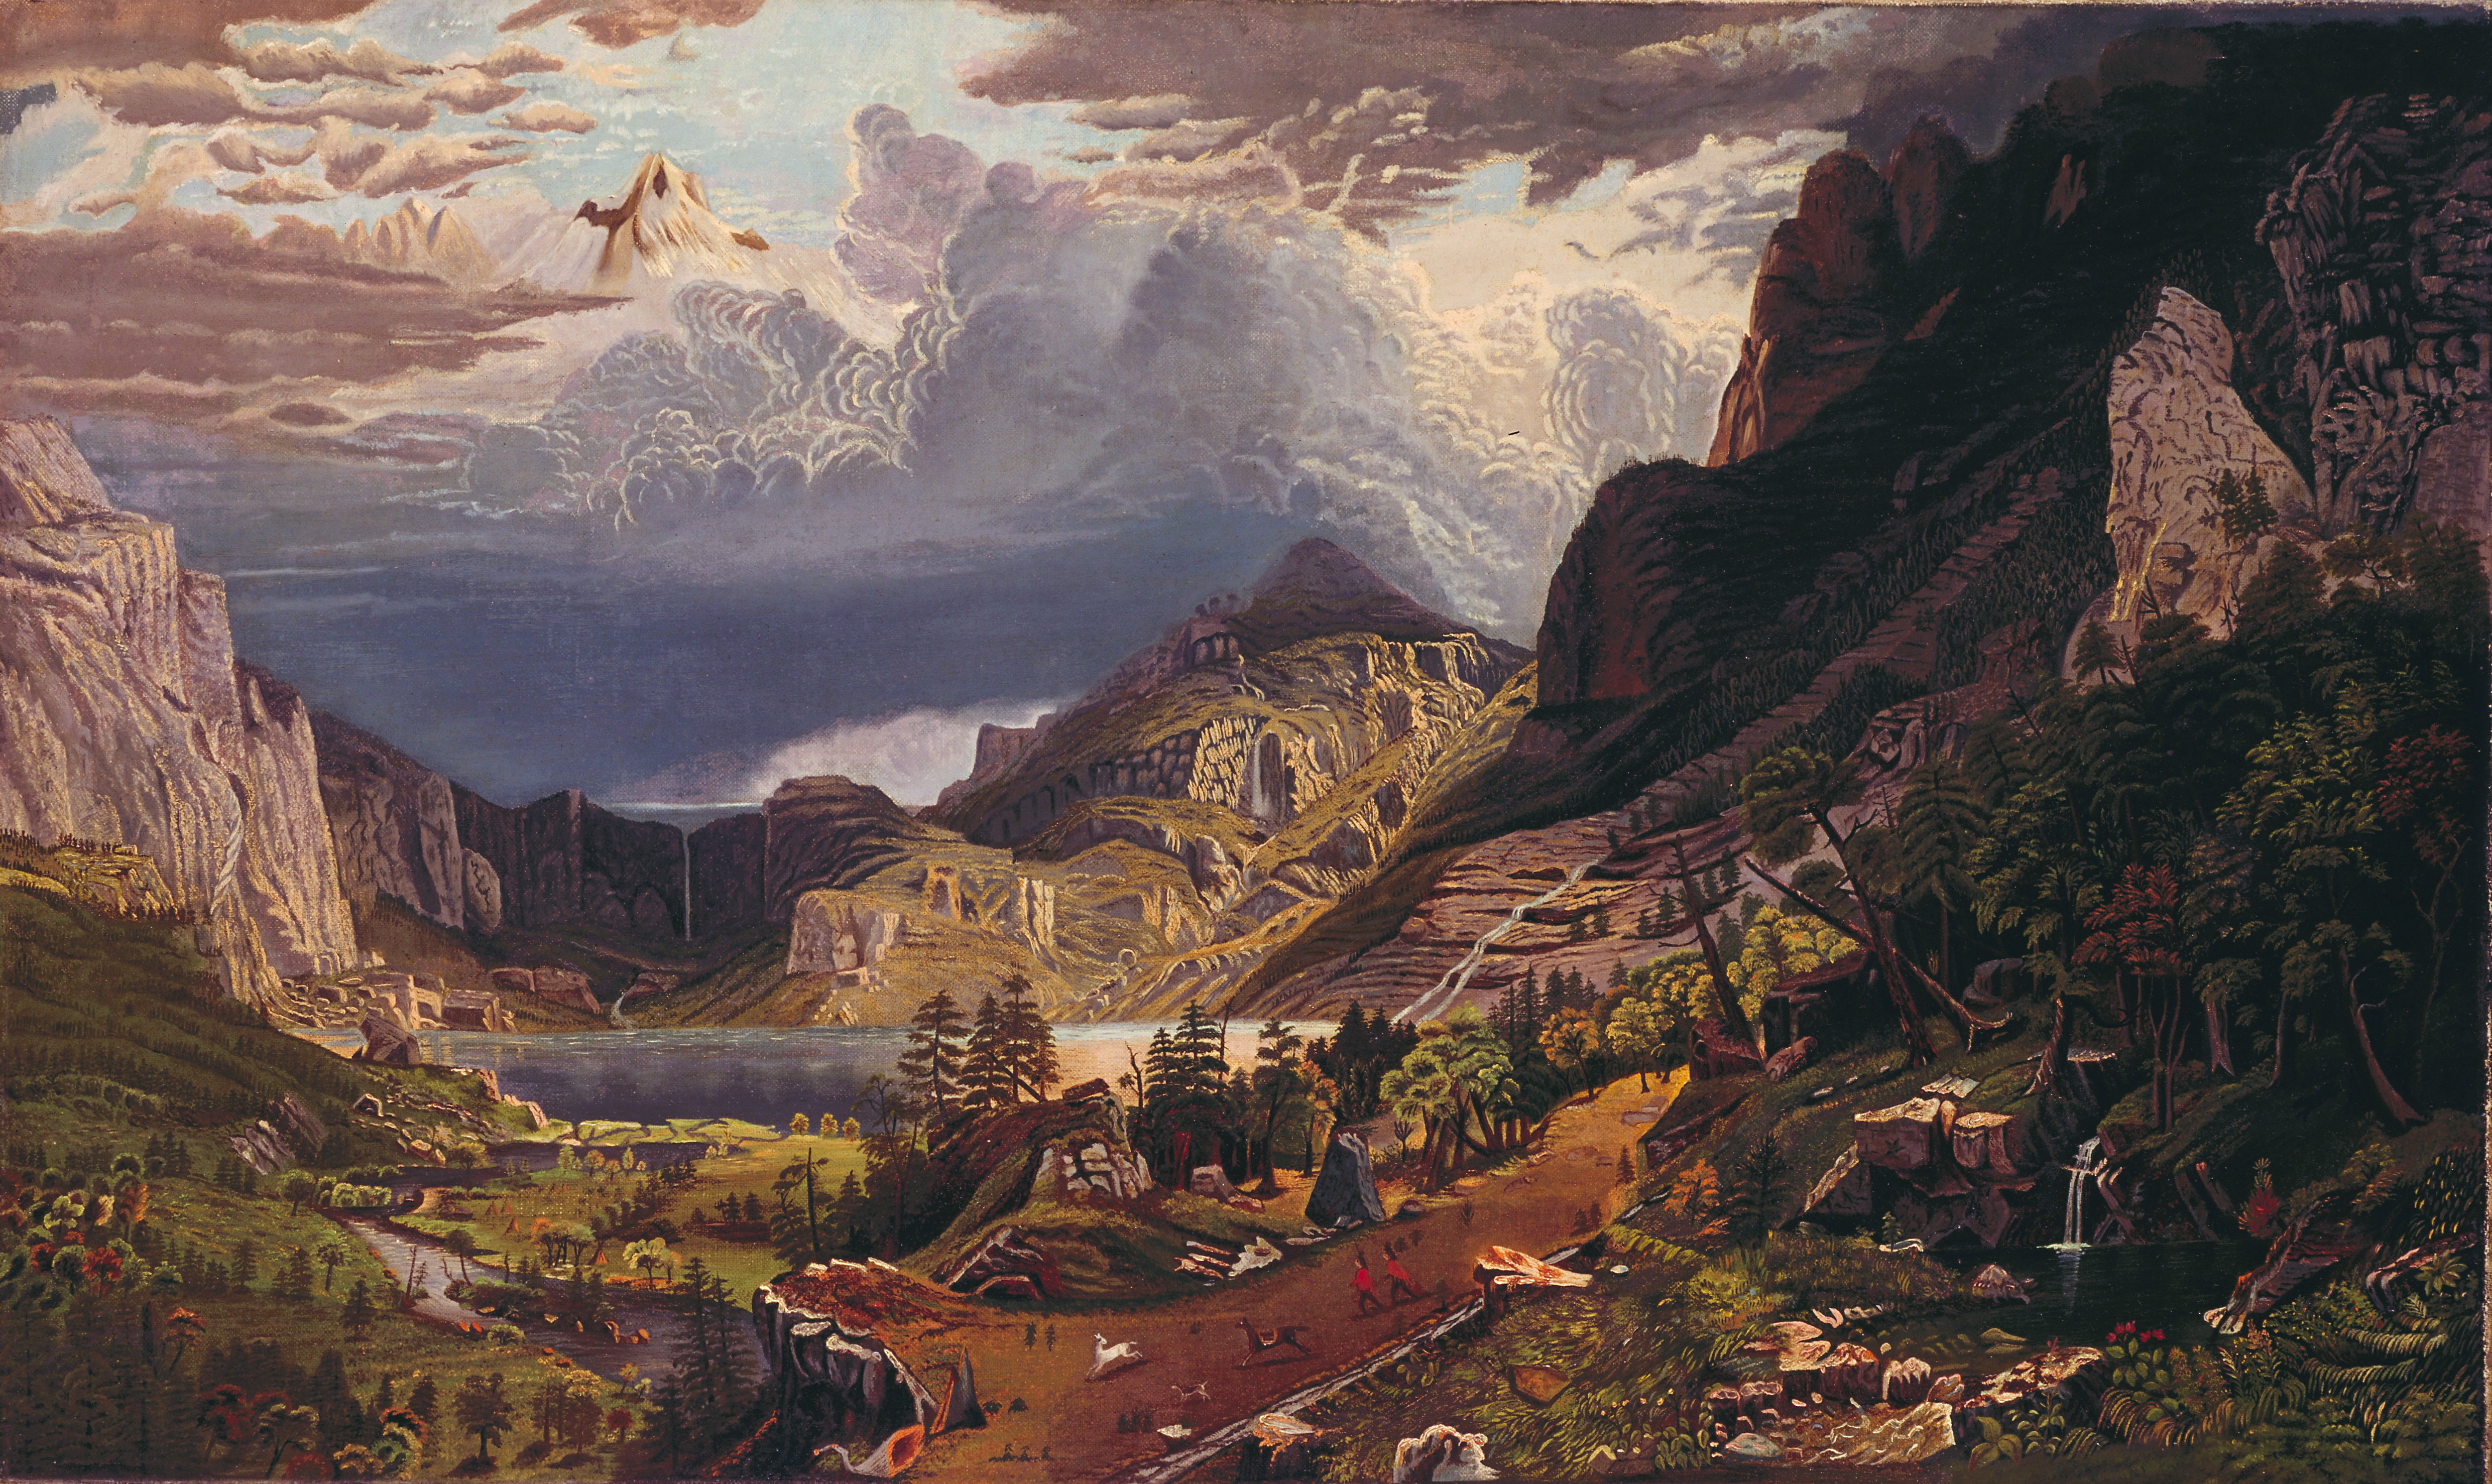 Storm in the Rocky Mountains, Mt. Rosalie by W.C. Sharon, after Albert Bierstadt